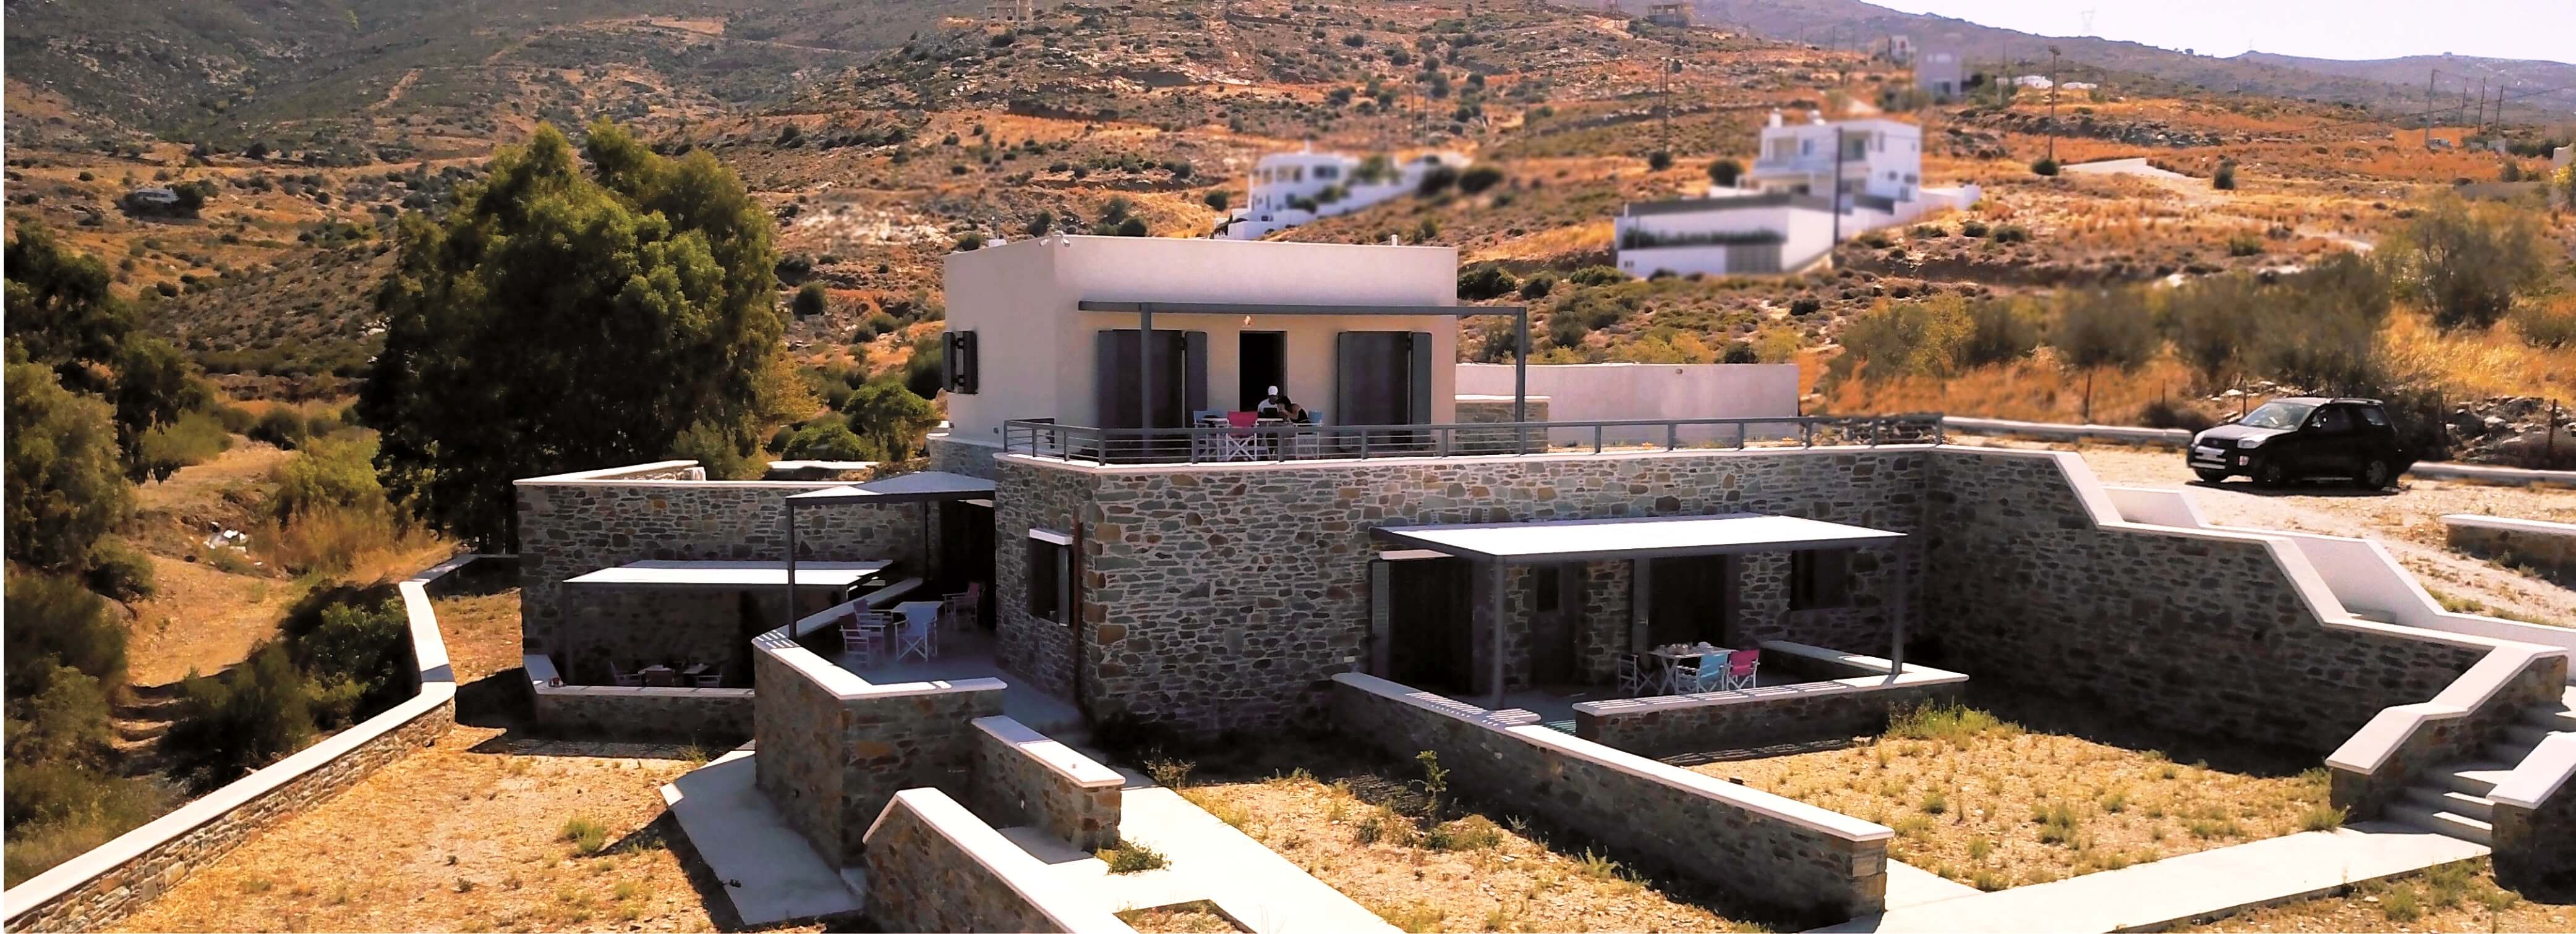 Karystos rent house Kavos Ενοικιαζόμενα παραθαλάσσια κατοικία σπίτι Κάρυστος Κάβος